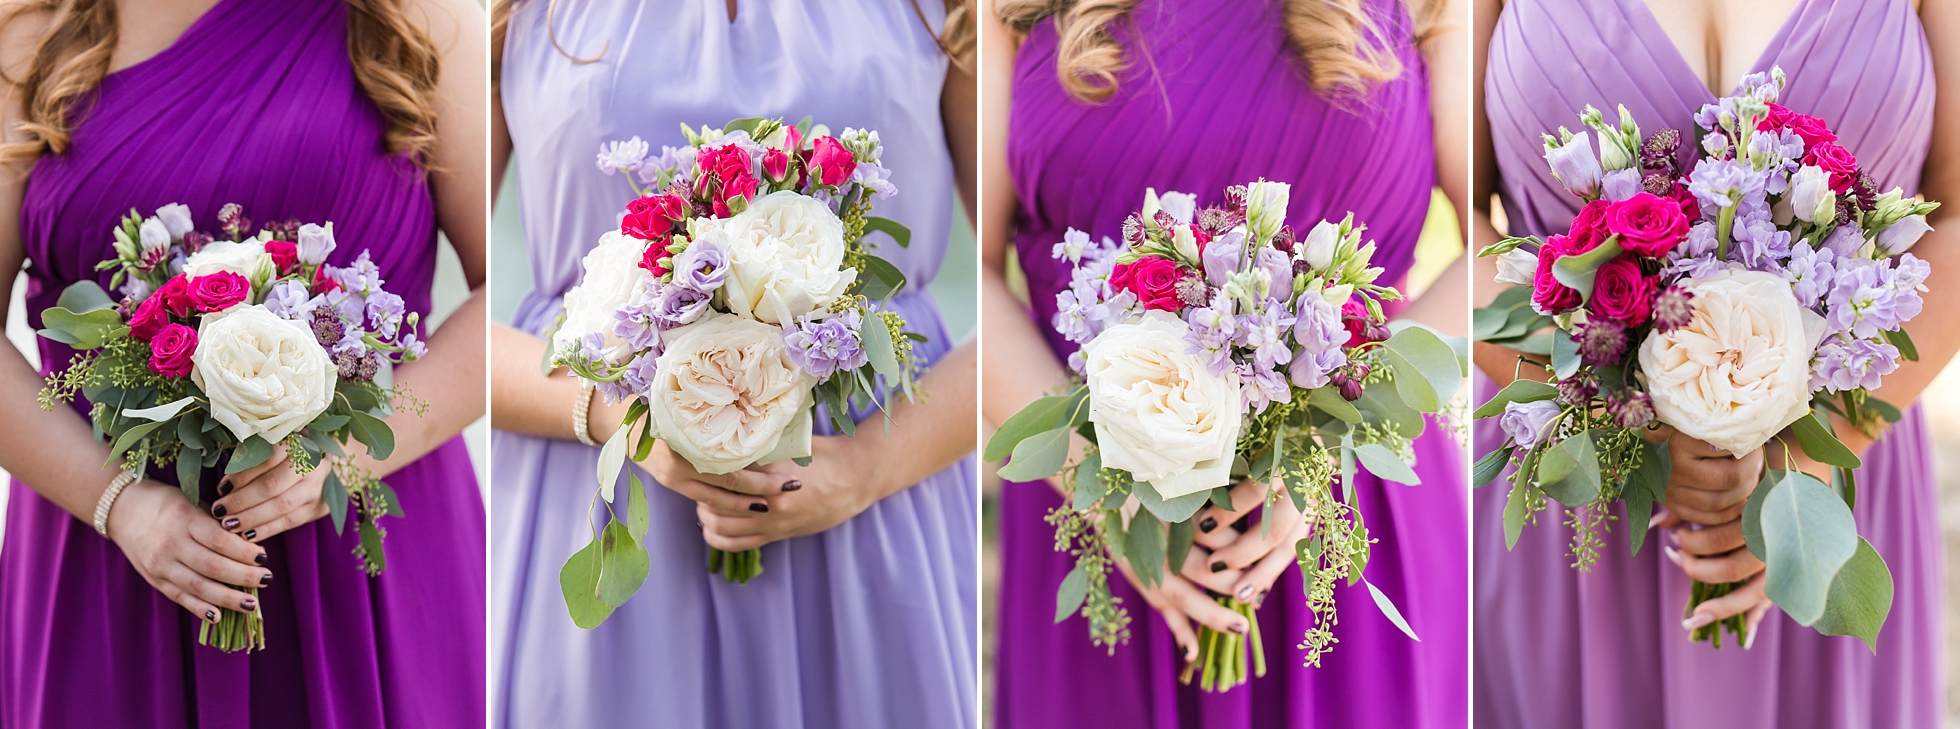 bridesmaids dresses purples hues